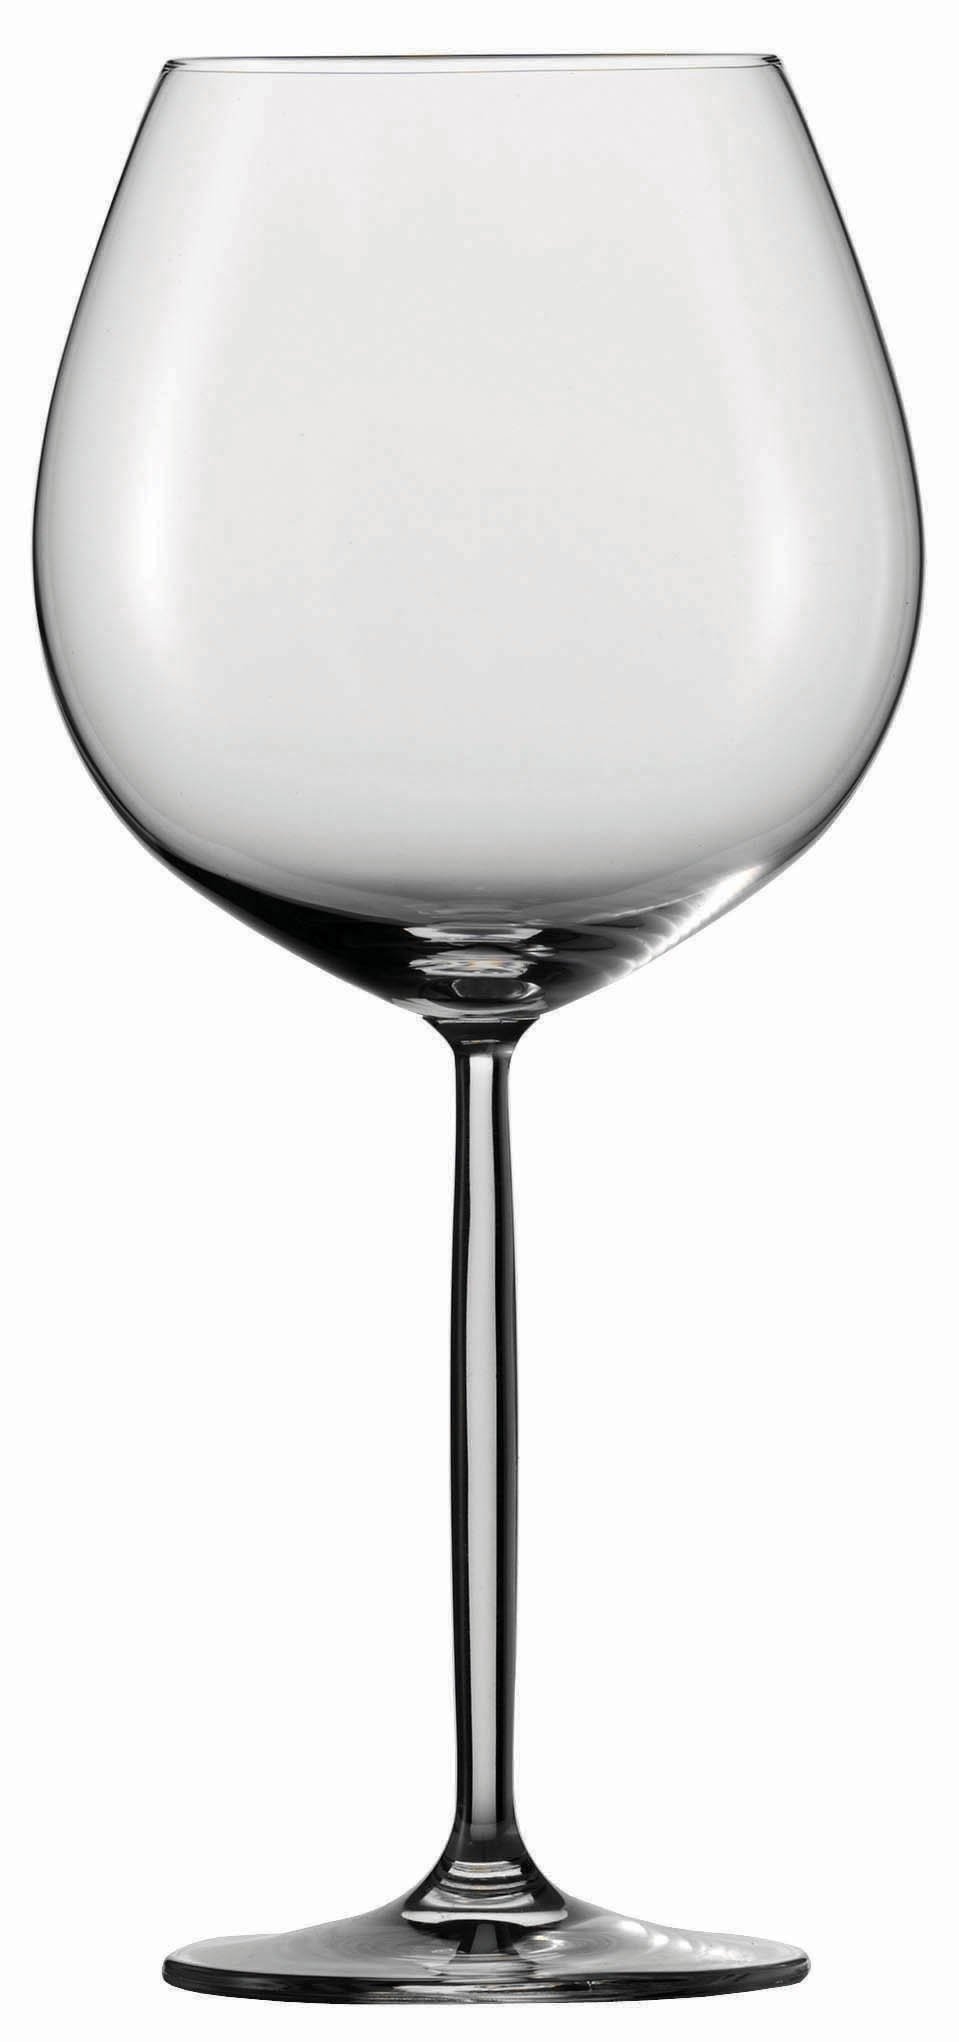 Schott Zwiesel Tritan Crystal Glass Diva Stemware Collection Claret Burgundy Red Wine Glass, 28.4-Ounce, Set of 6